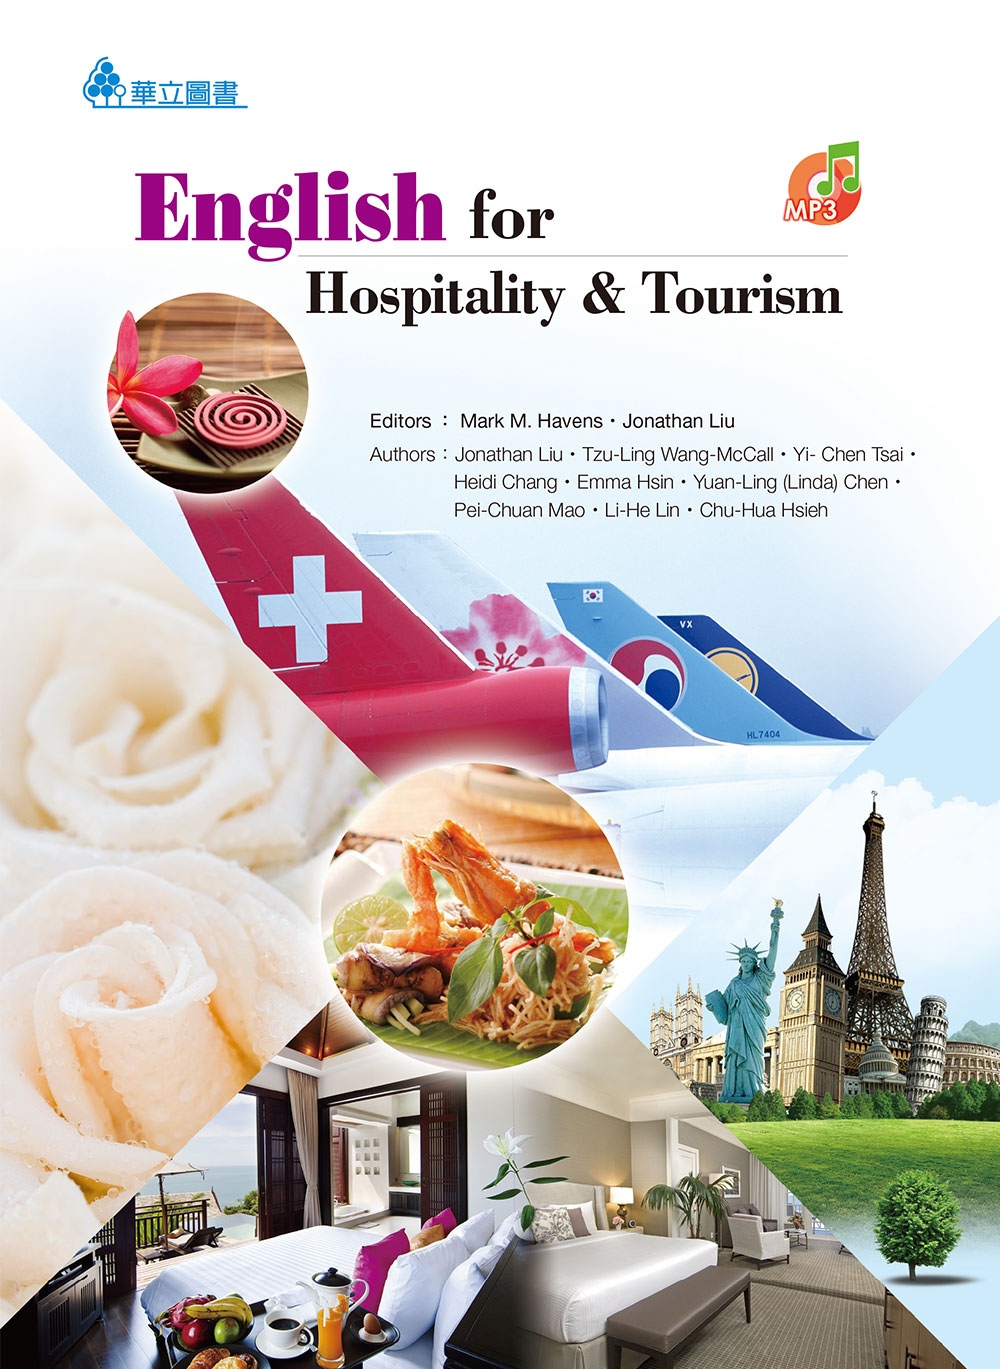 English for Hospitality & Tourism